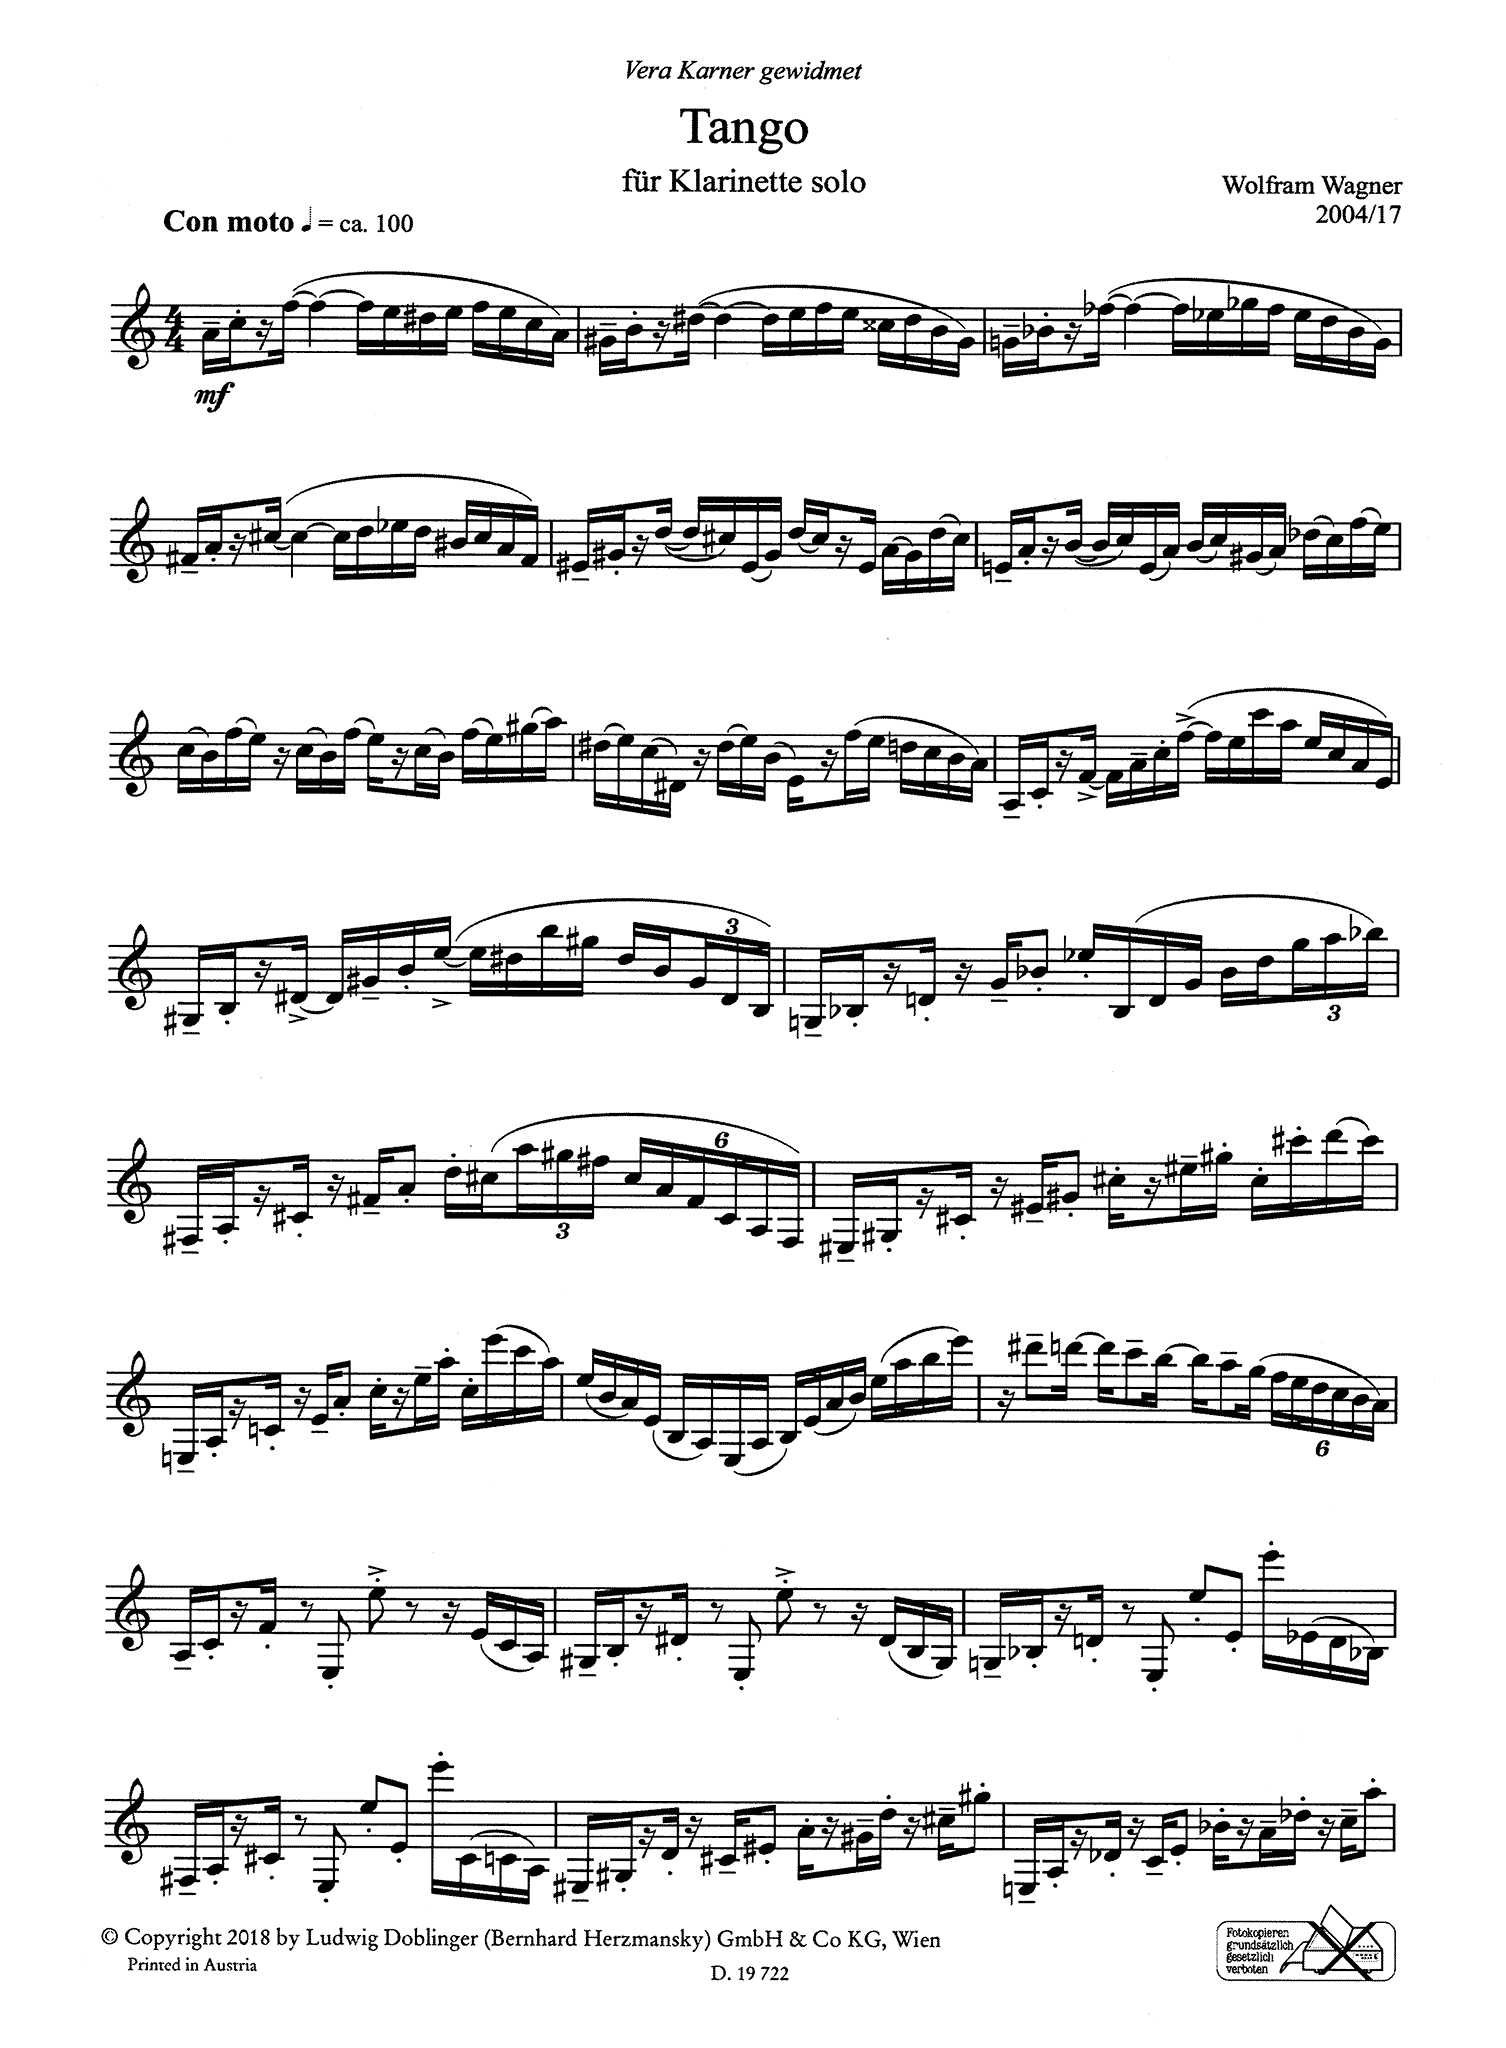 Wolfram Wagner Tango unaccompanied clarinet page 1